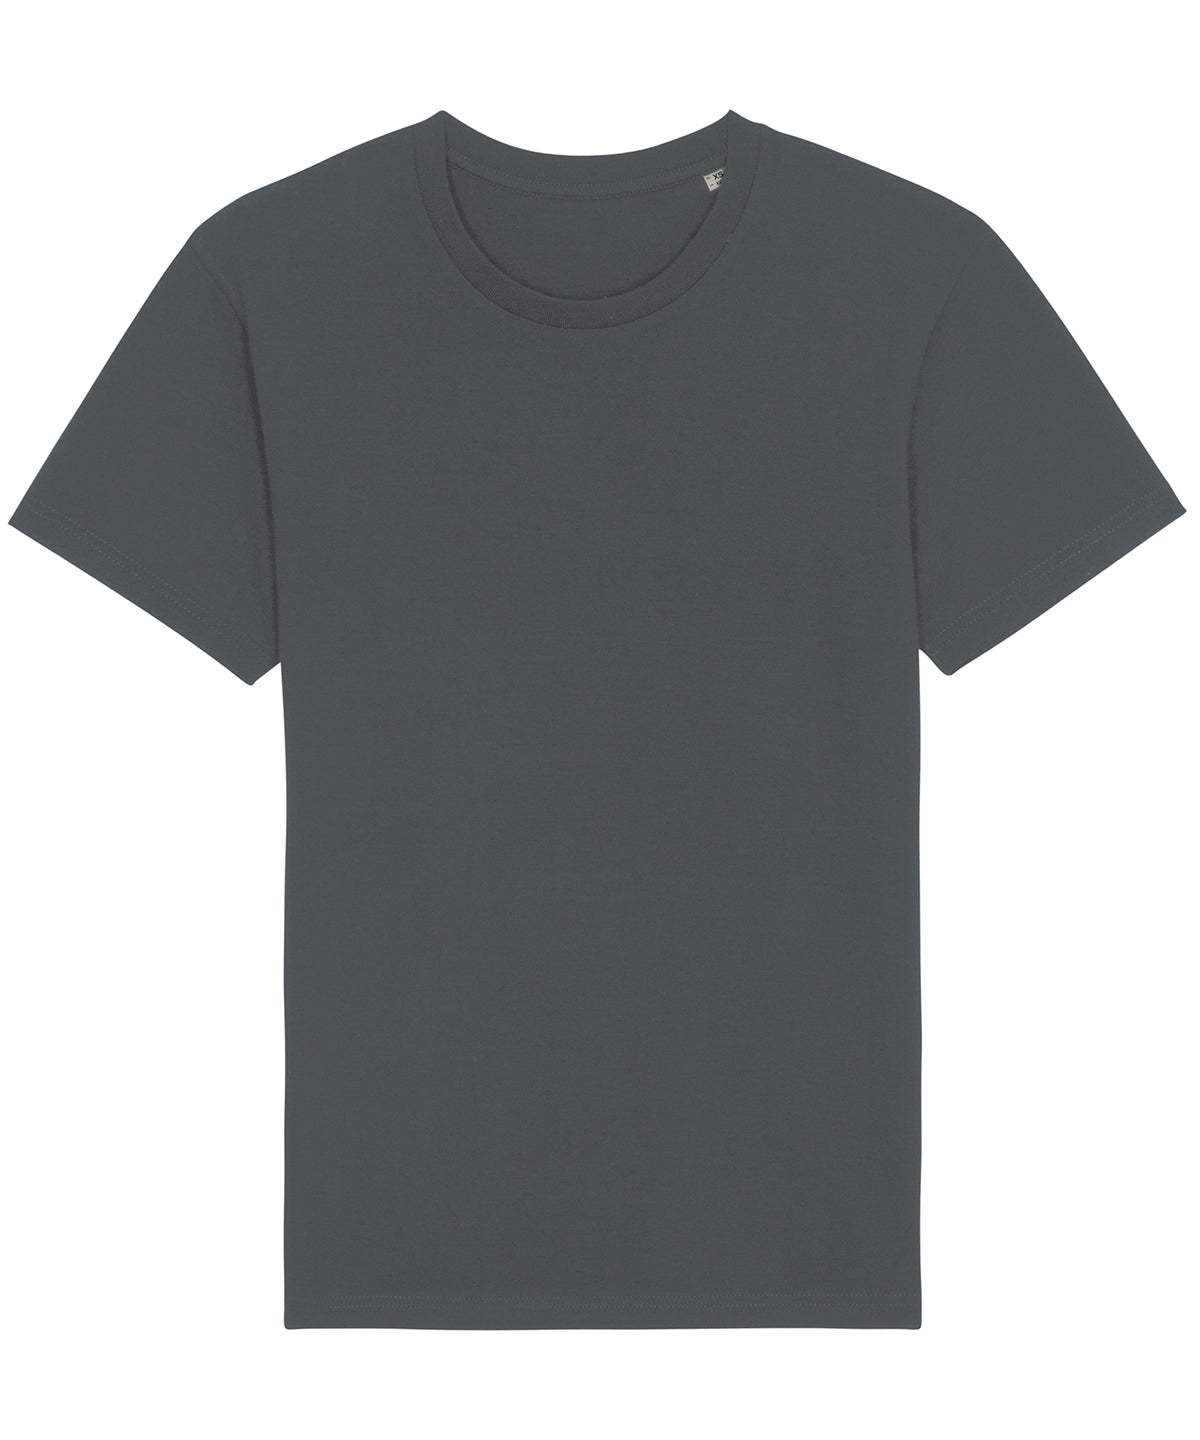 Stuttermabolir - Rocker The Essential Unisex T-shirt (STTU758)